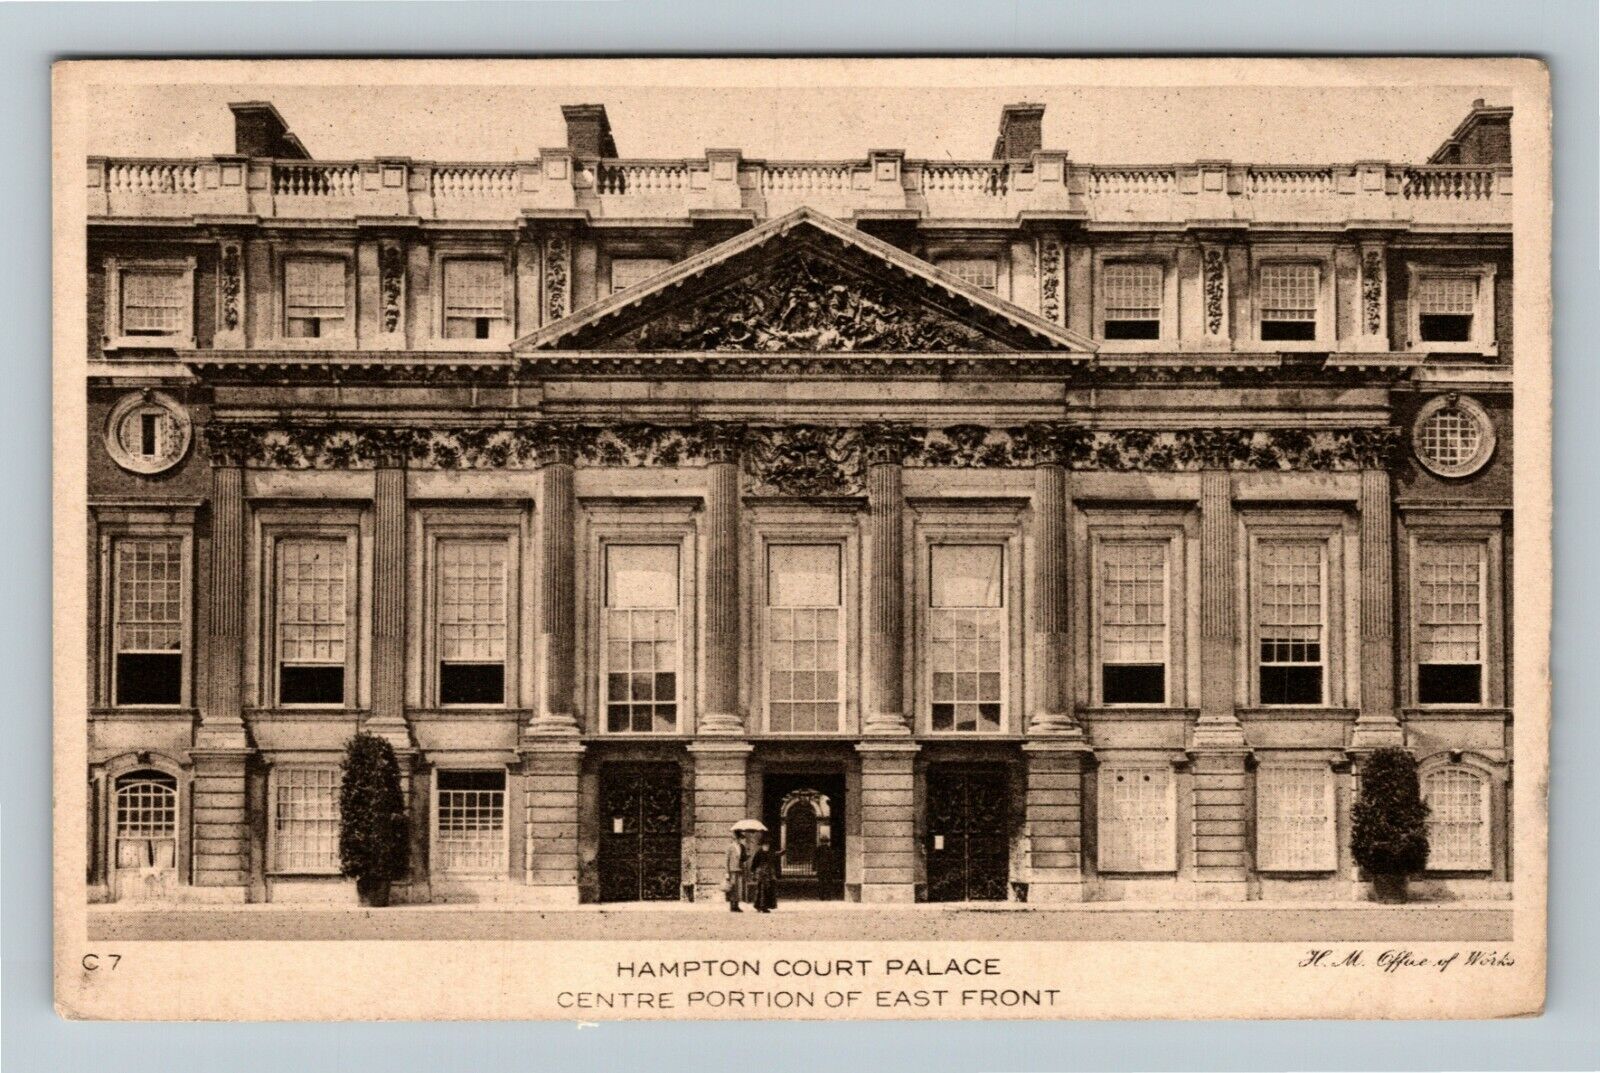 East Moseley United Kingdom, HAMPTON COURT PALACE MAIN ENTRANCE Vintage Postcard